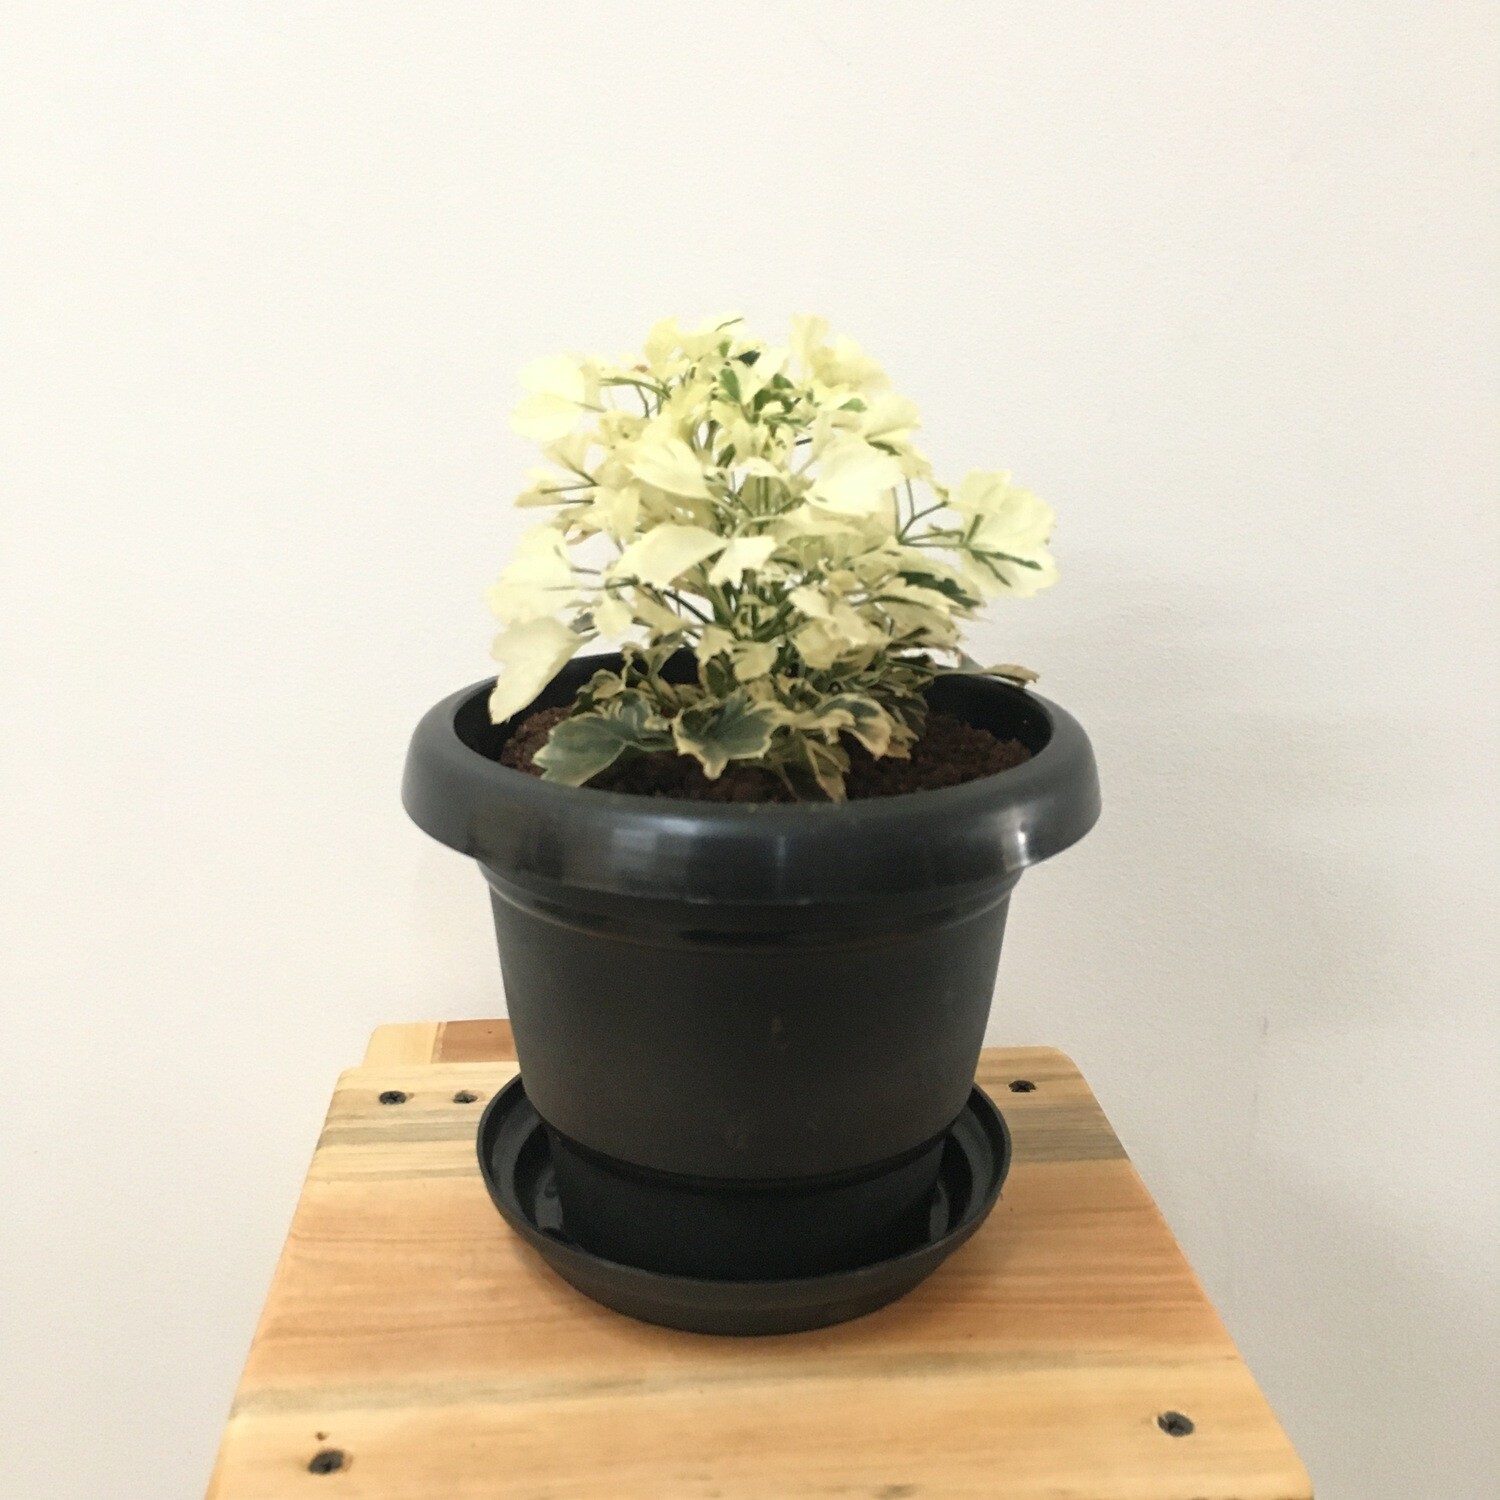 Aralia Miniature White - Aralia Plant in 4 inches Black Round Pot